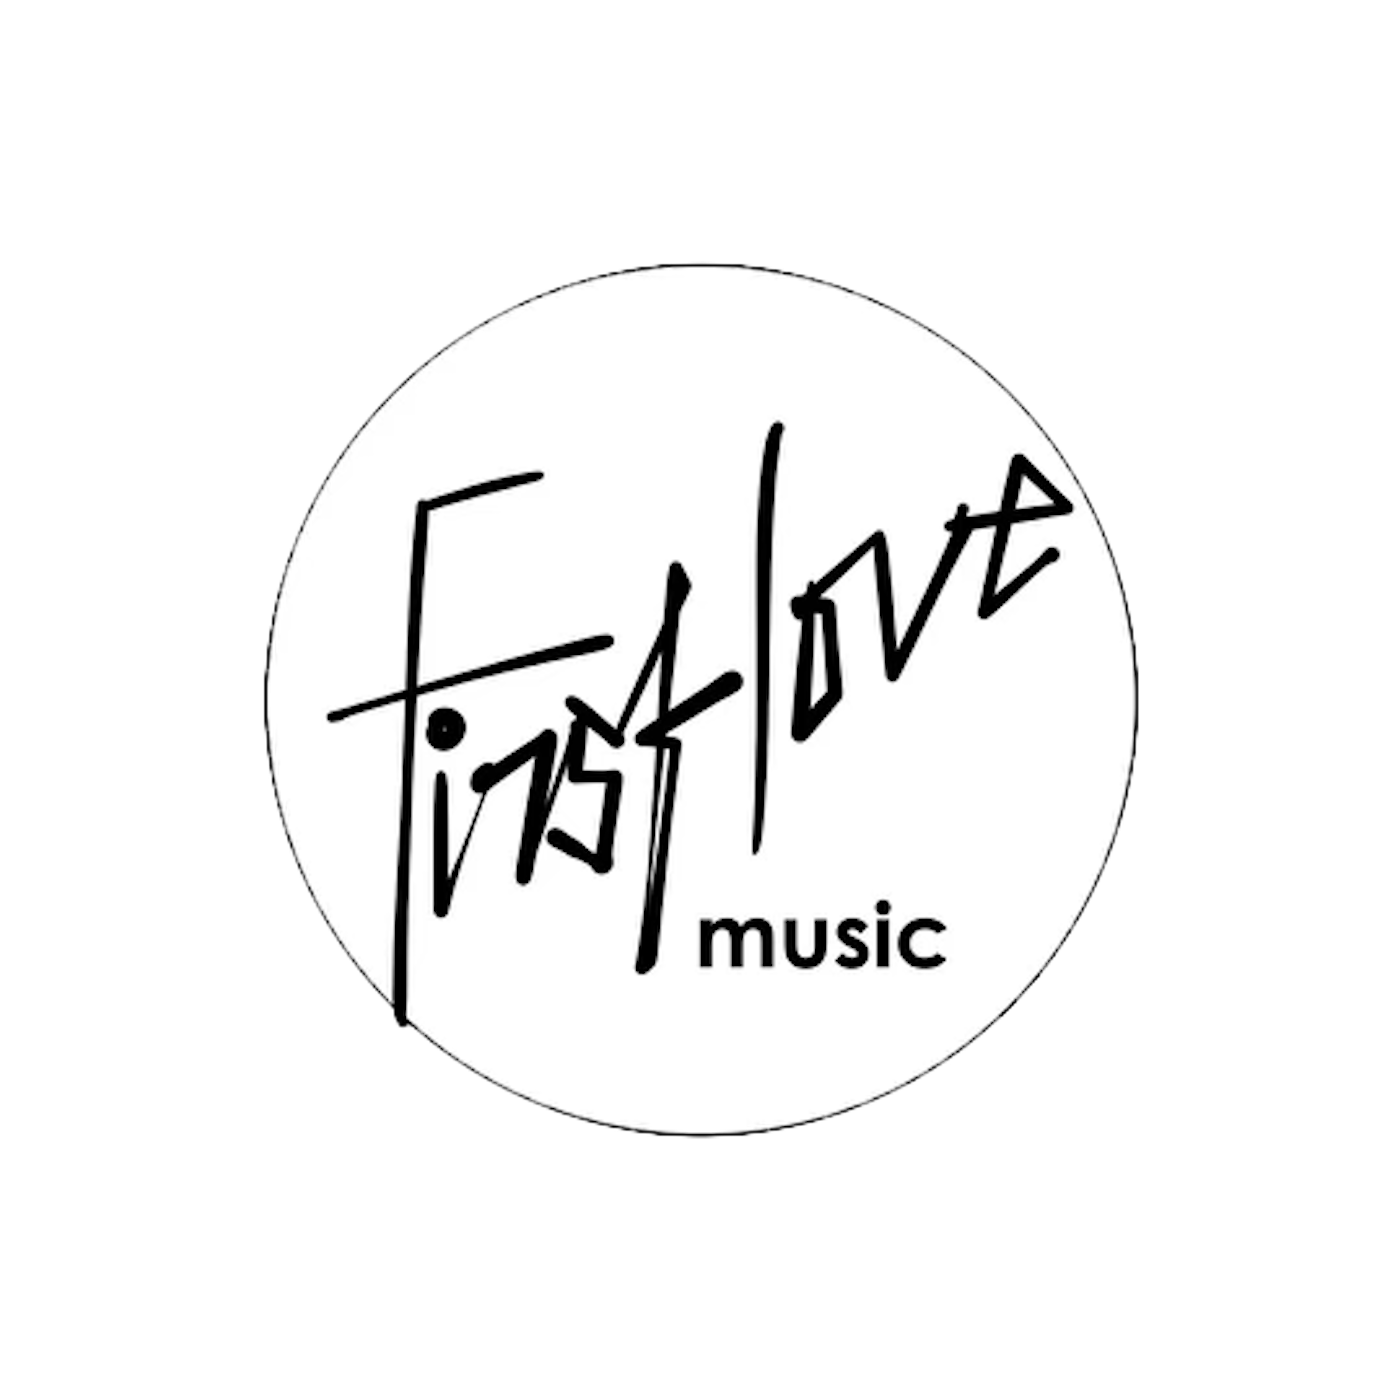 First Love Music